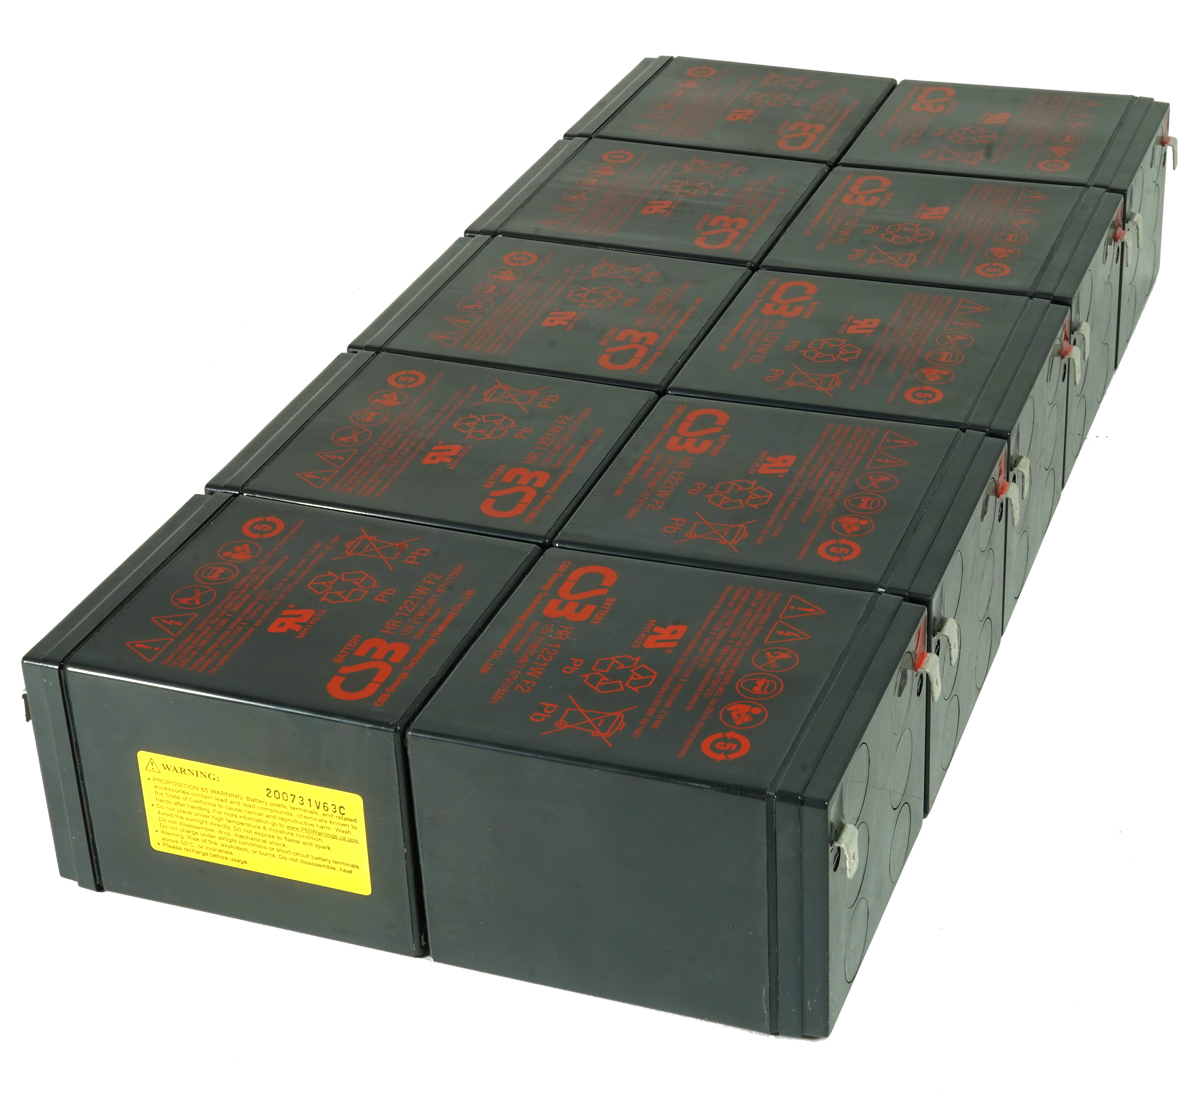 MDS118 UPS Battery Kit - Replaces APC RBC118